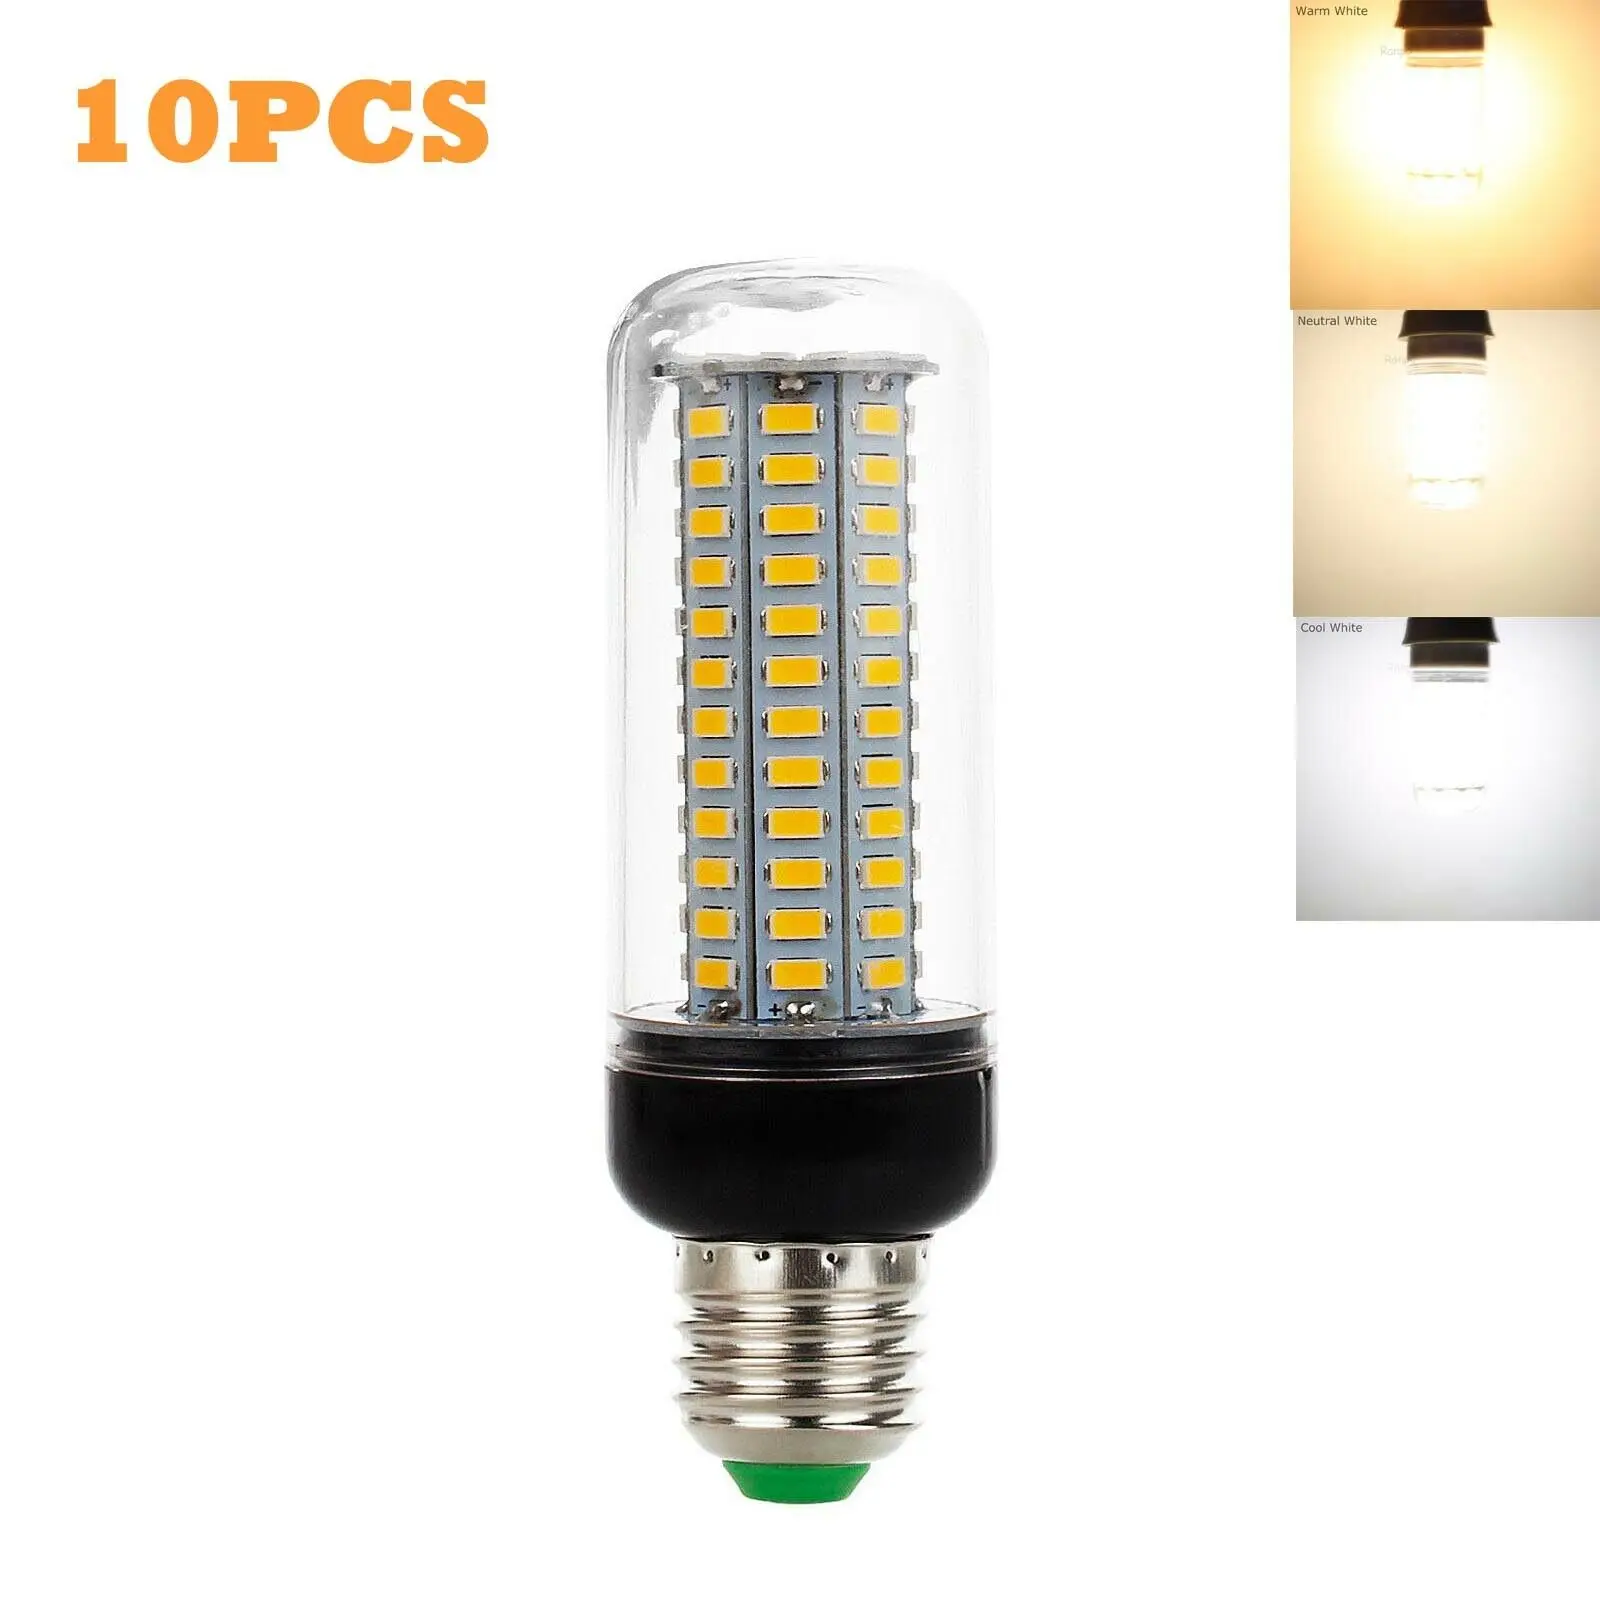 10PCS AC 85-265V LED Corn Lamp  Ultra-Bright Bulbs RK  Energy Save Lamp E27 Chandelier Lighting Warm white 30W 5730SMD